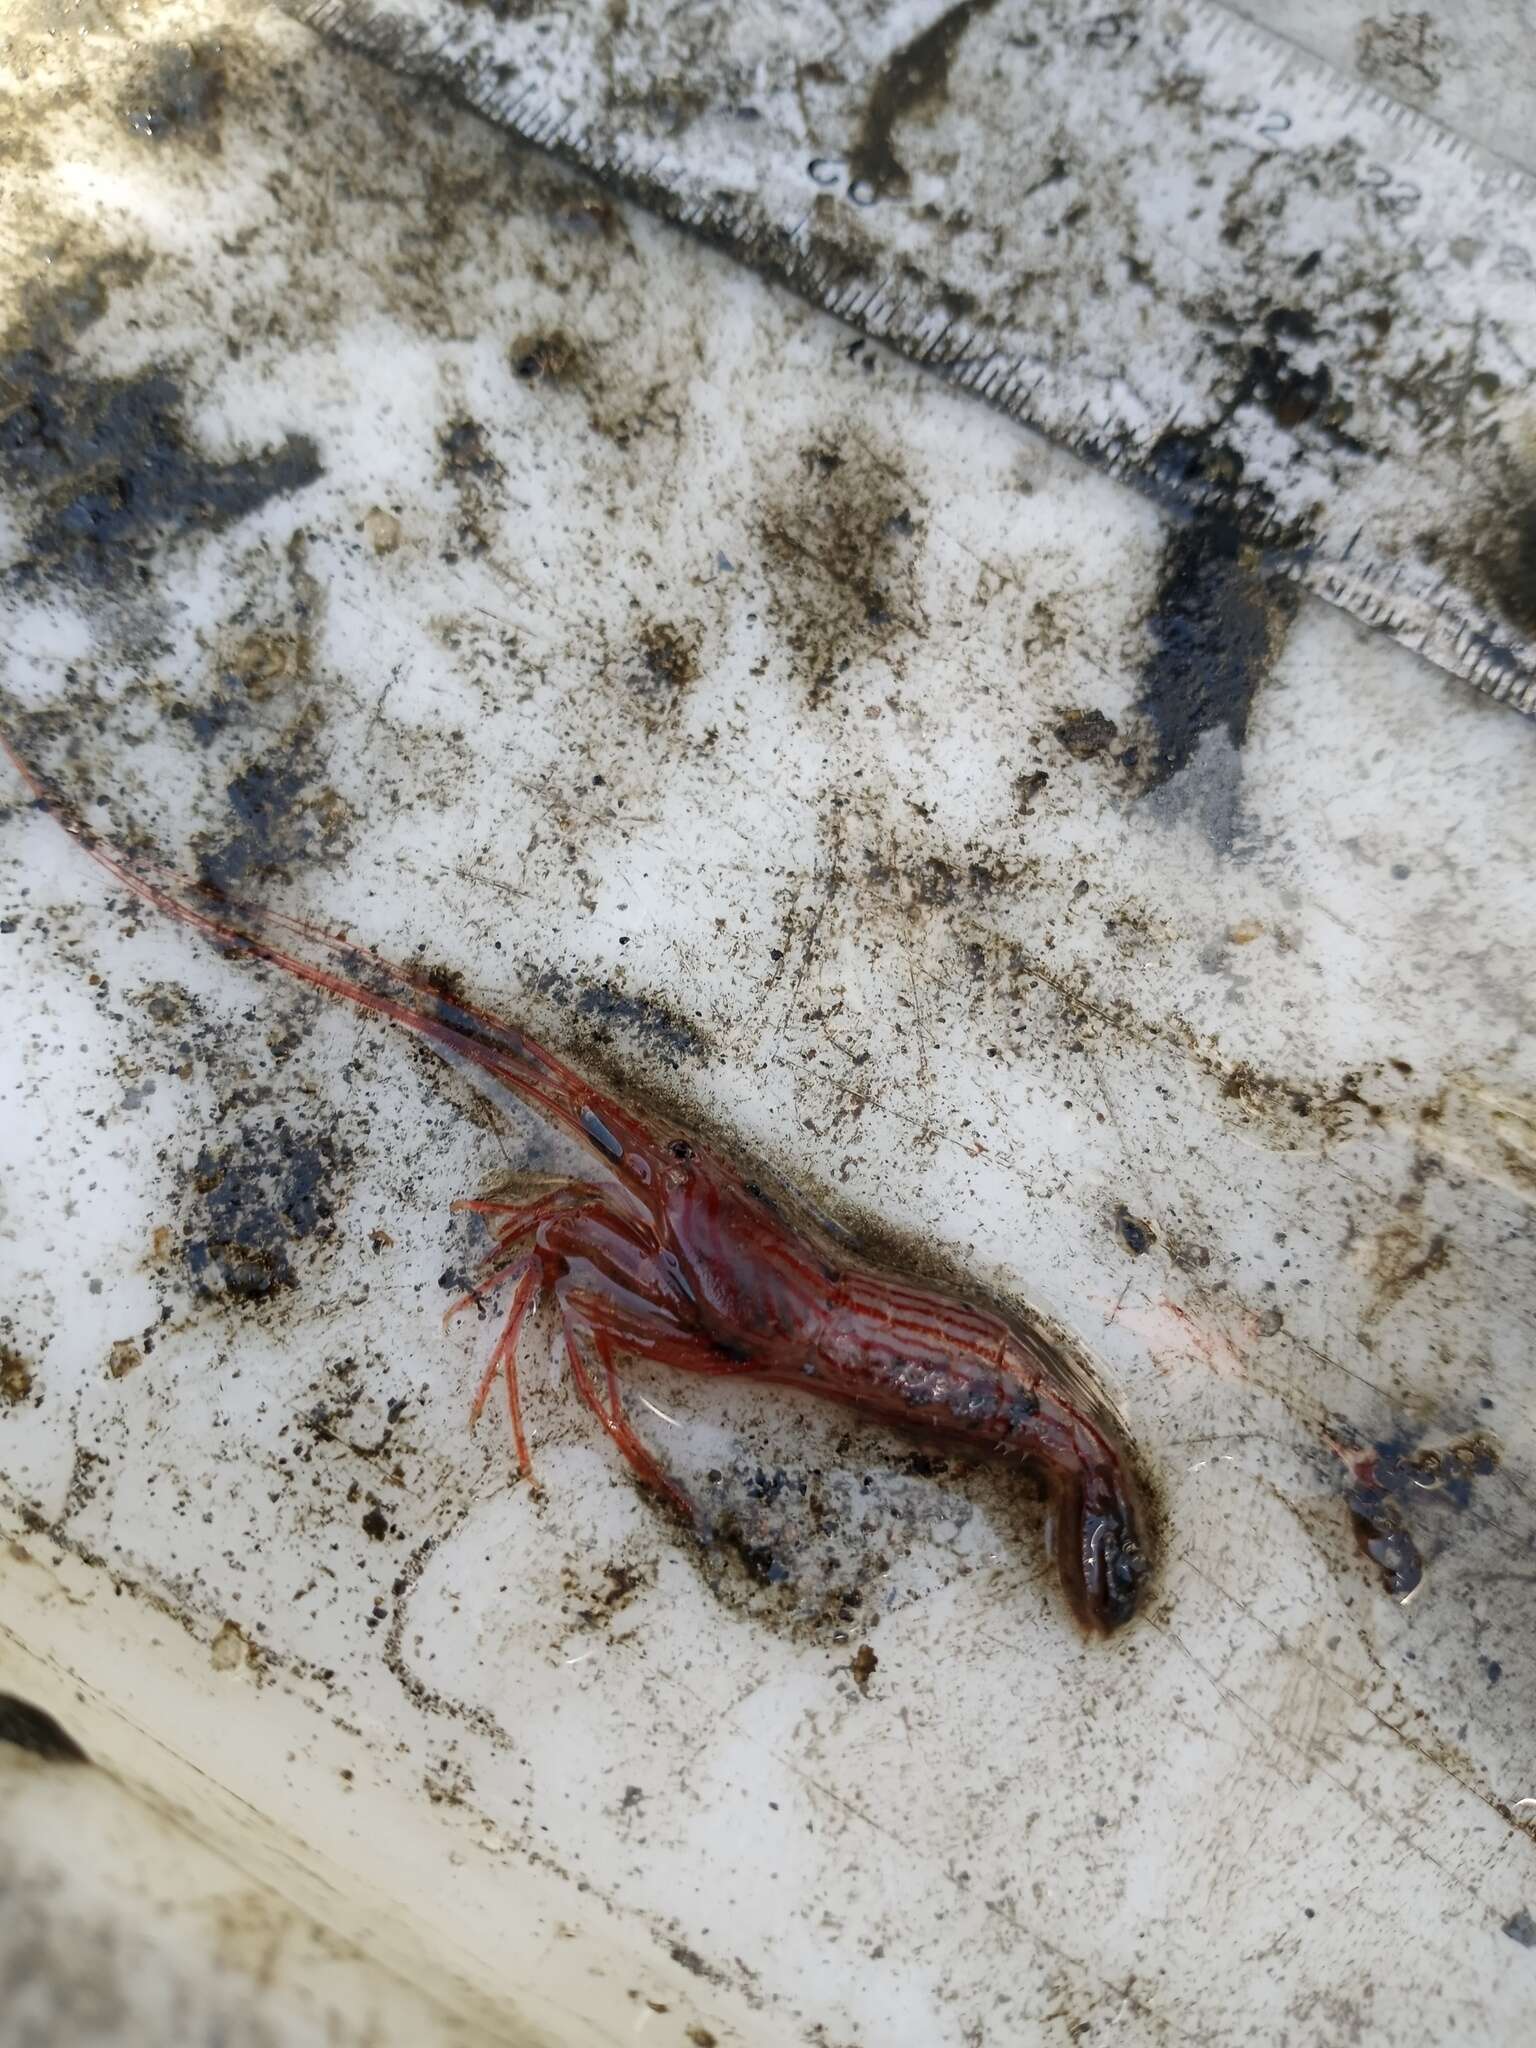 Image of Indian lined shrimp